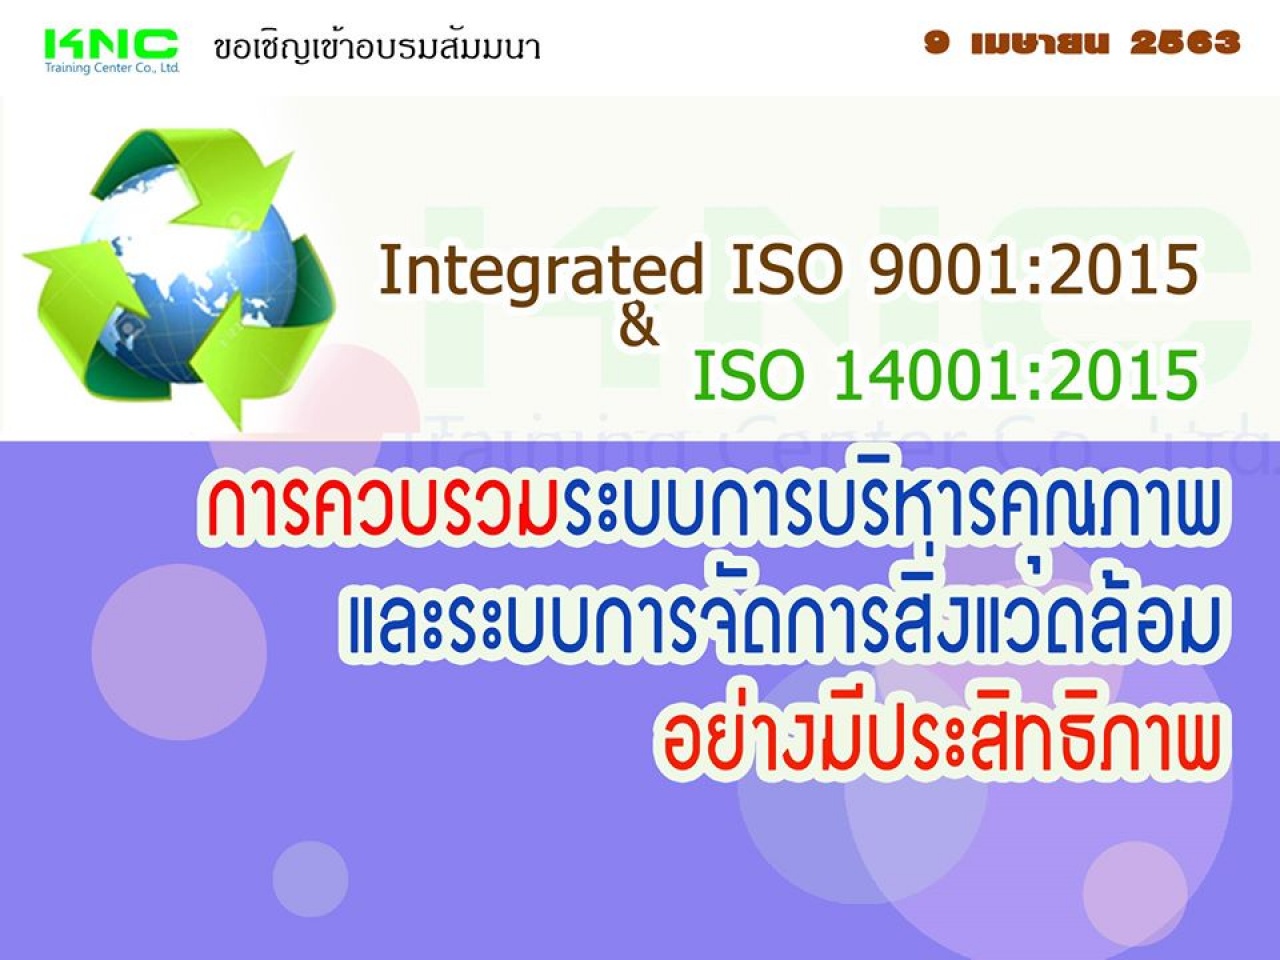 Integrated ISO 9001:2015 & ISO 14001:2015 : การควบรวมระบบการบริหารคุณภาพและระบบการจัดการสิ่งแวดล้อมอย่างมีประสิทธิภาพ